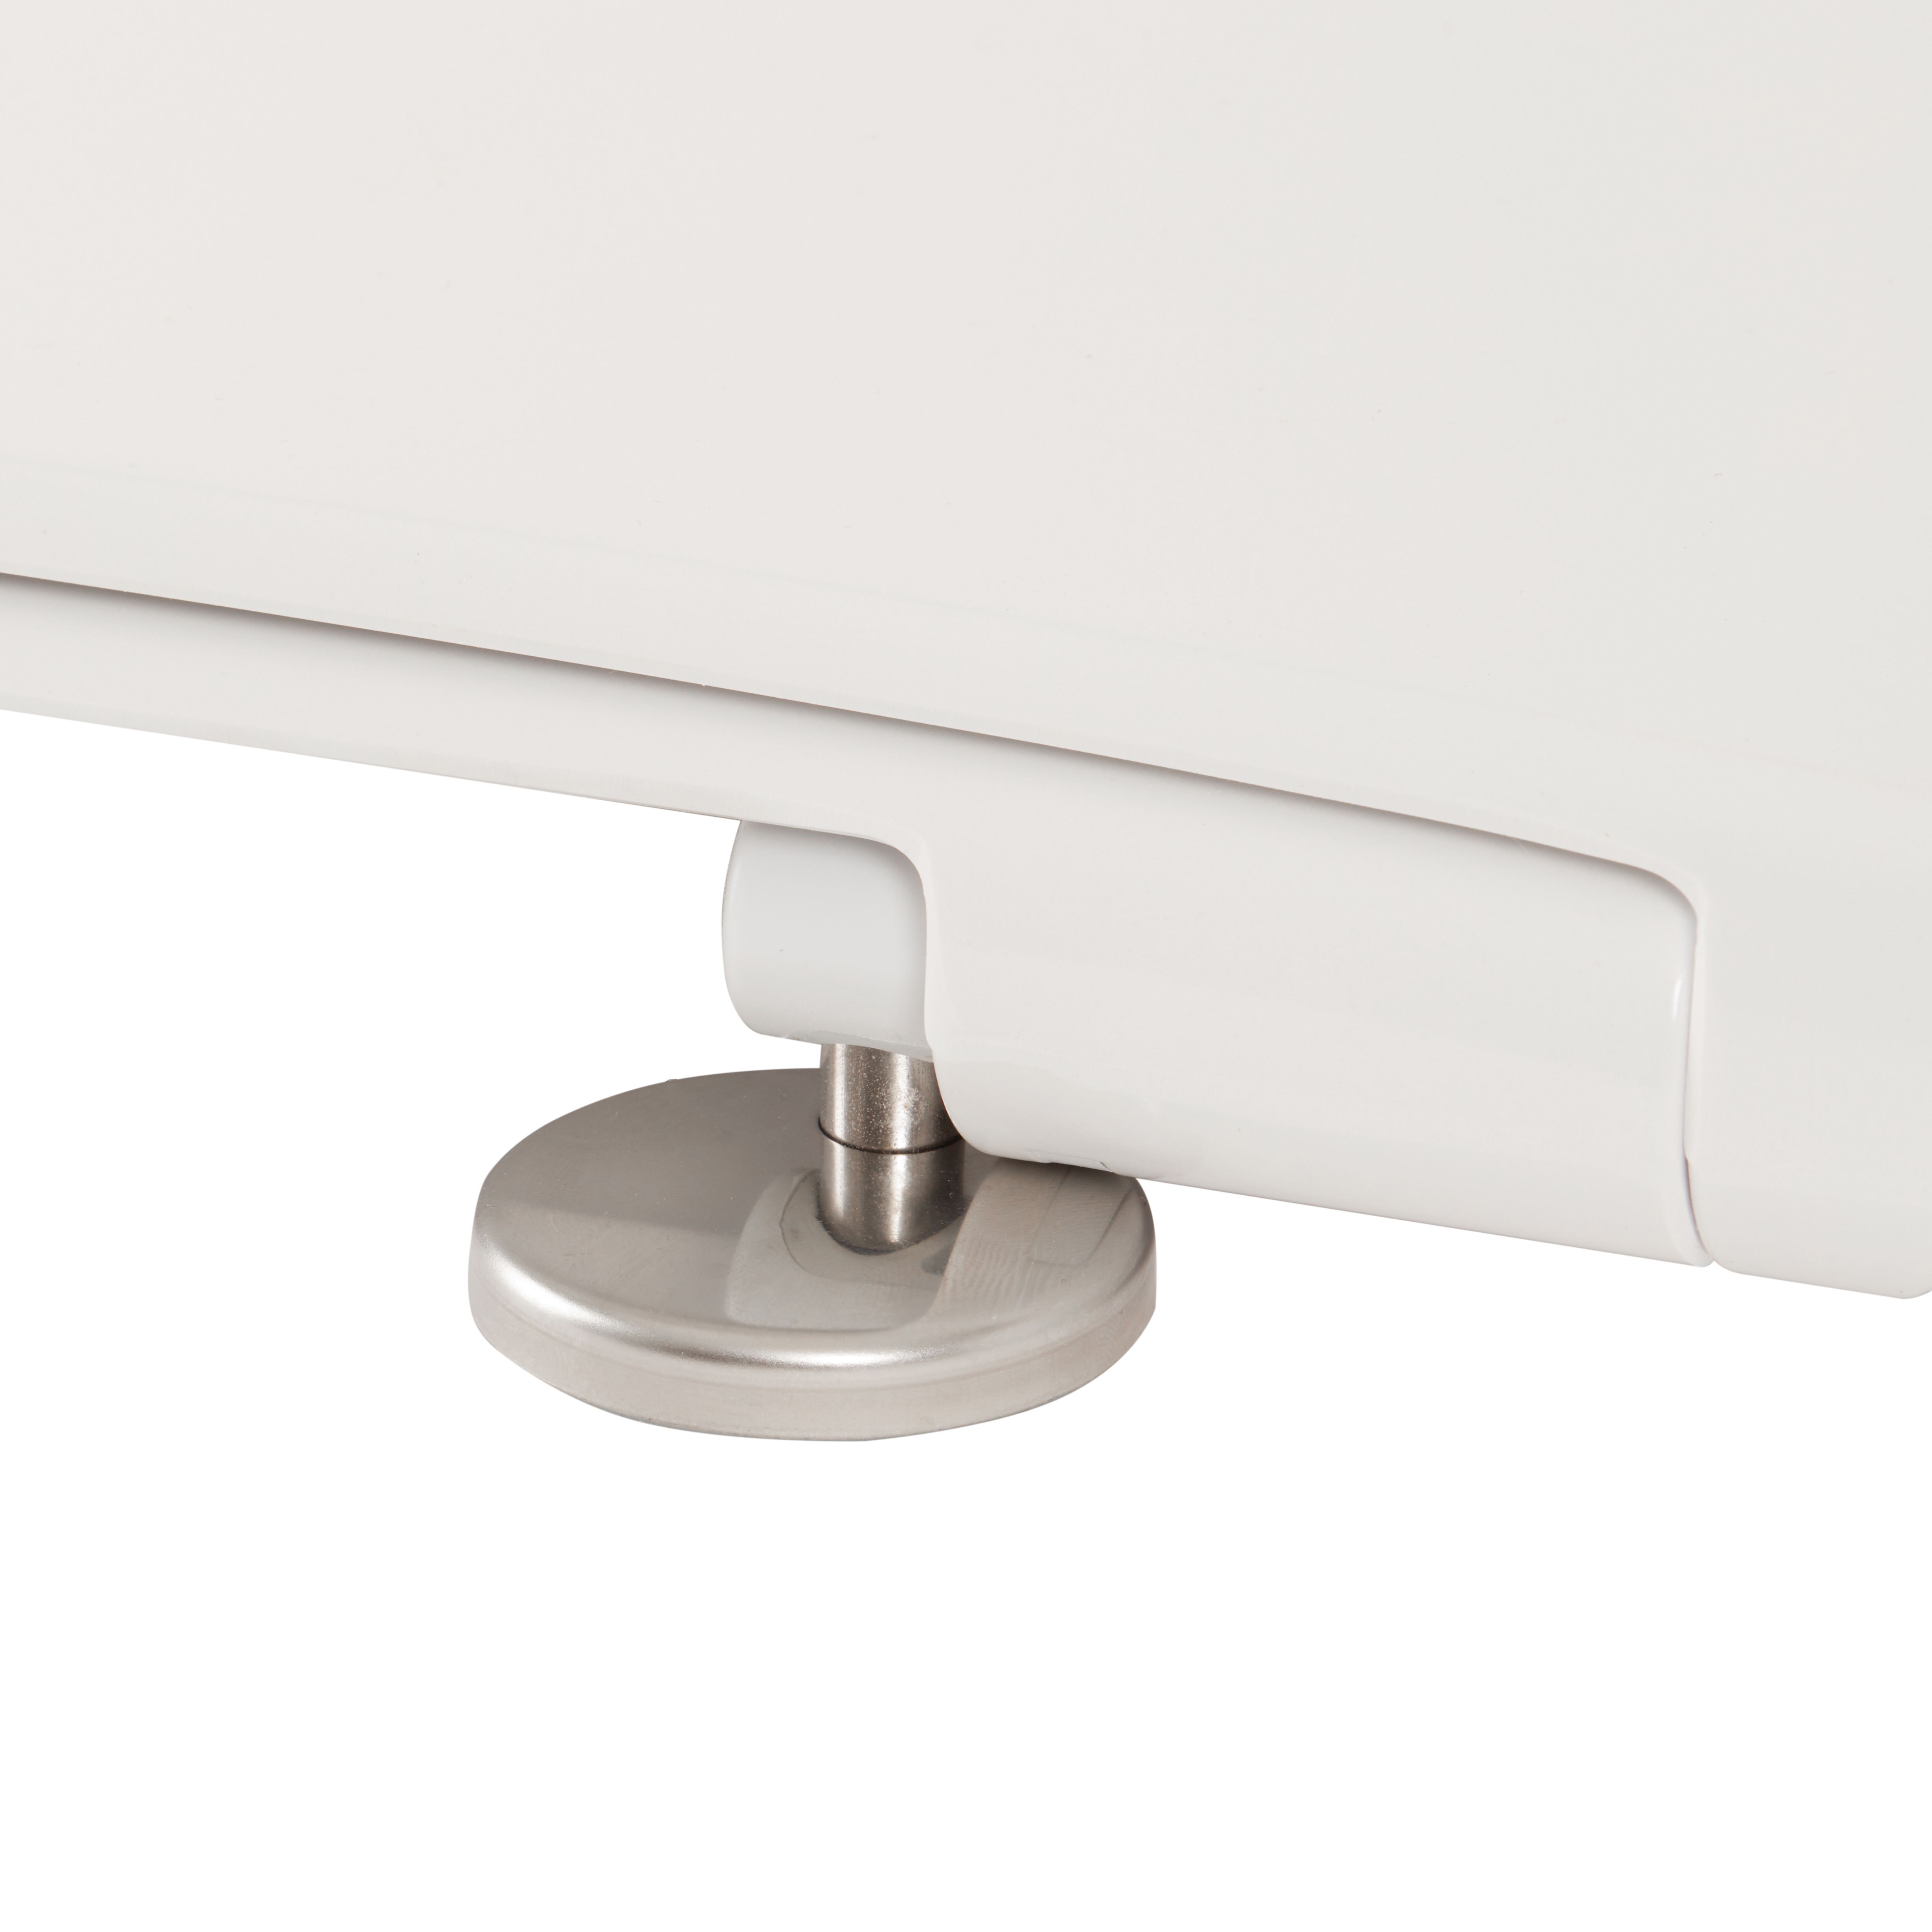 Cooke & Lewis Santoro White Soft close Toilet seat | Departments | DIY